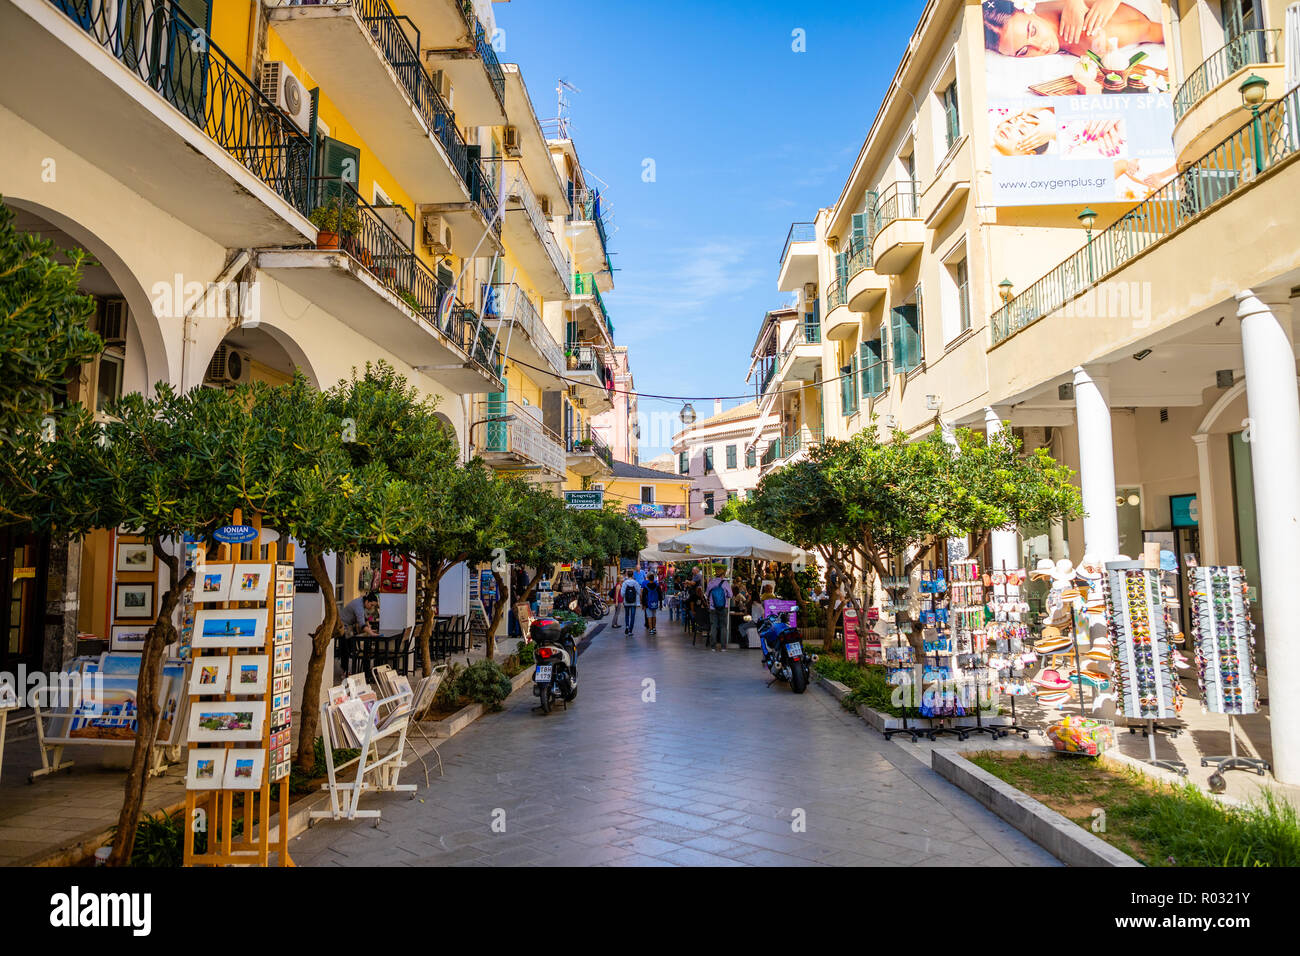 Corfu, Greece - 16.10.2018: View of typical narrow street of an old town of Corfu, Greece Stock Photo